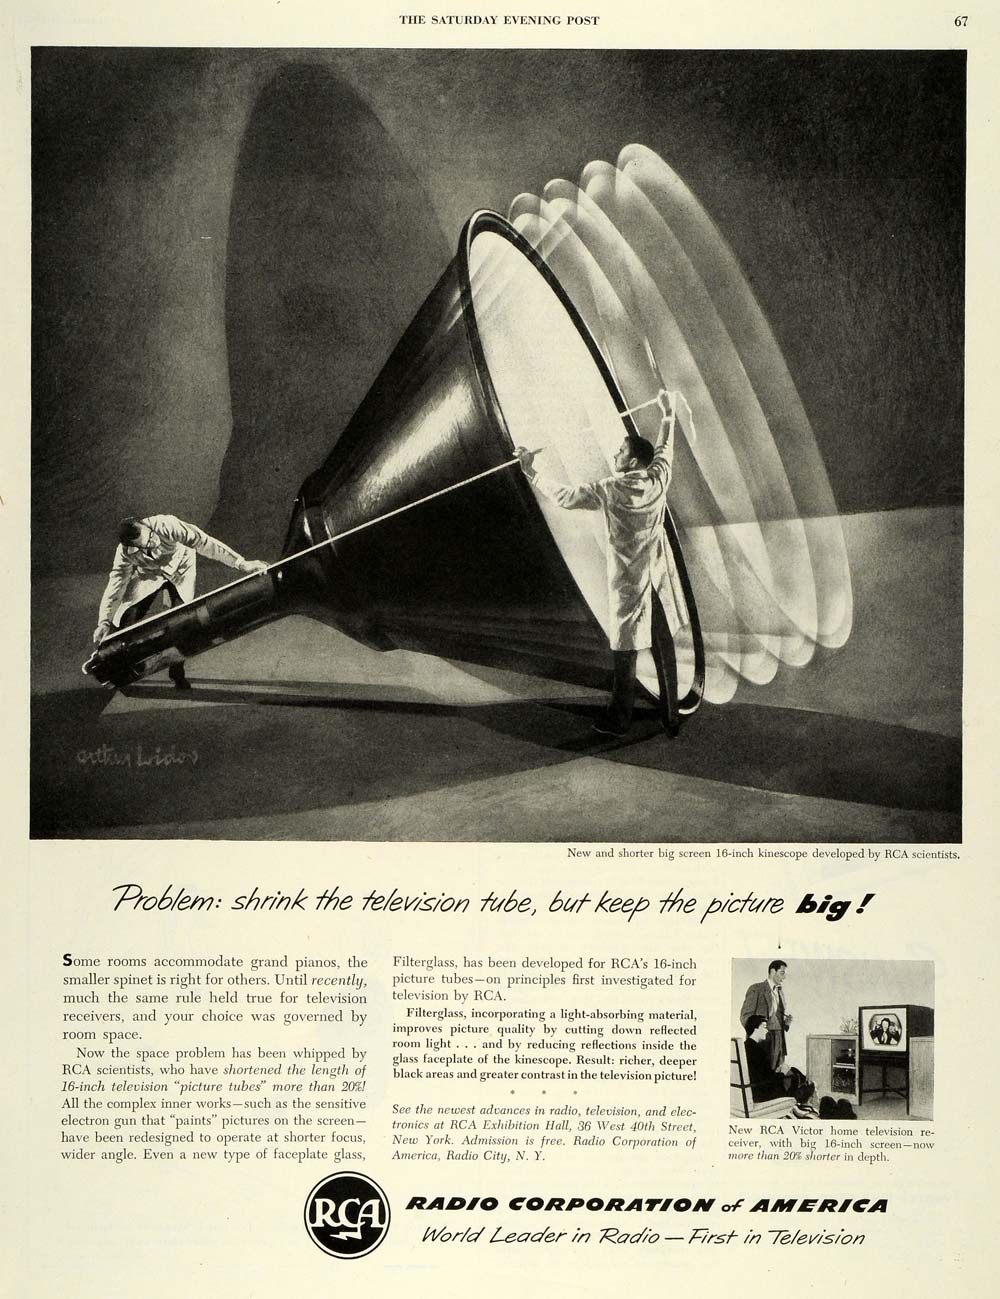 1950 Ad Arthur Lidov Illustration Kinescope RCA Scientists Television TV SEP5